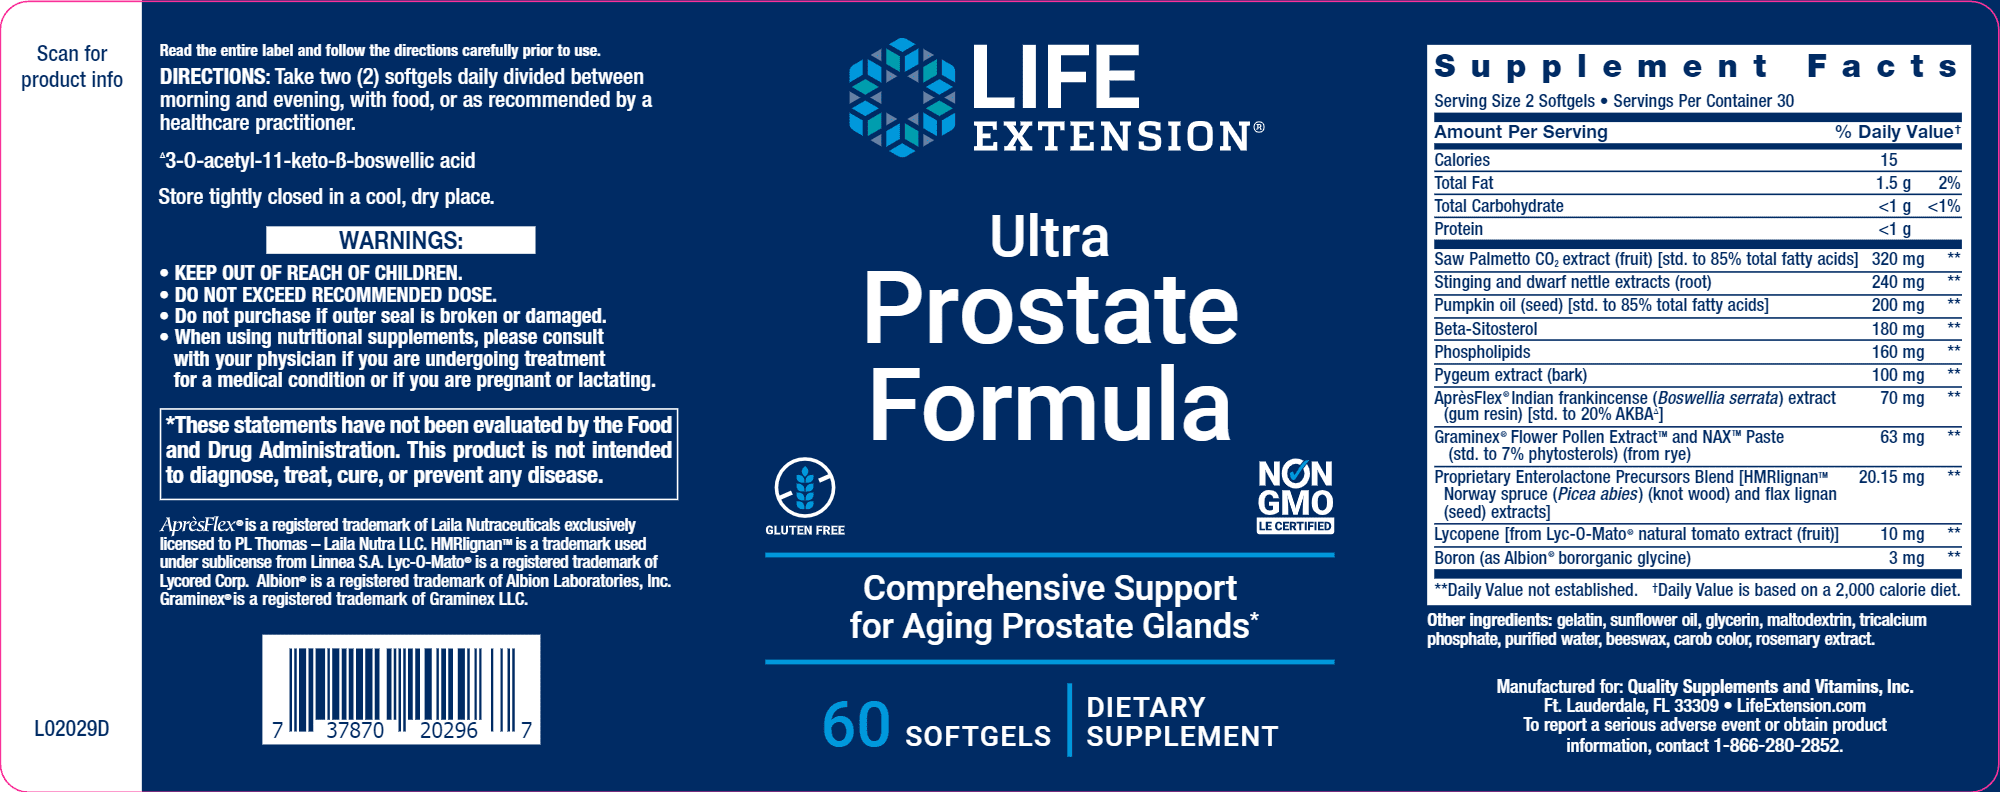 Ultra Prostate Formula 60 gels